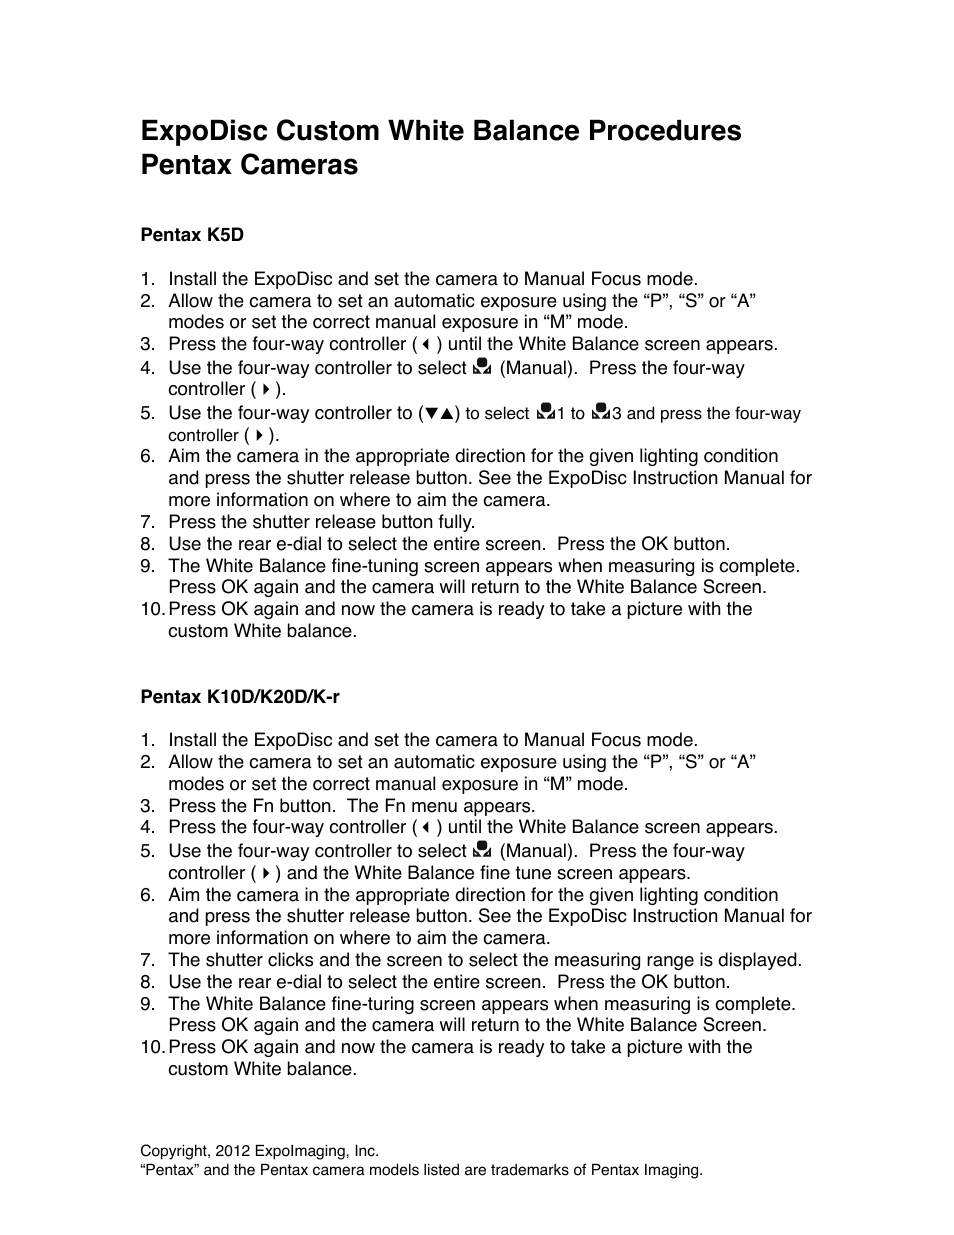 ExpoDisc: Pentax Custom WB